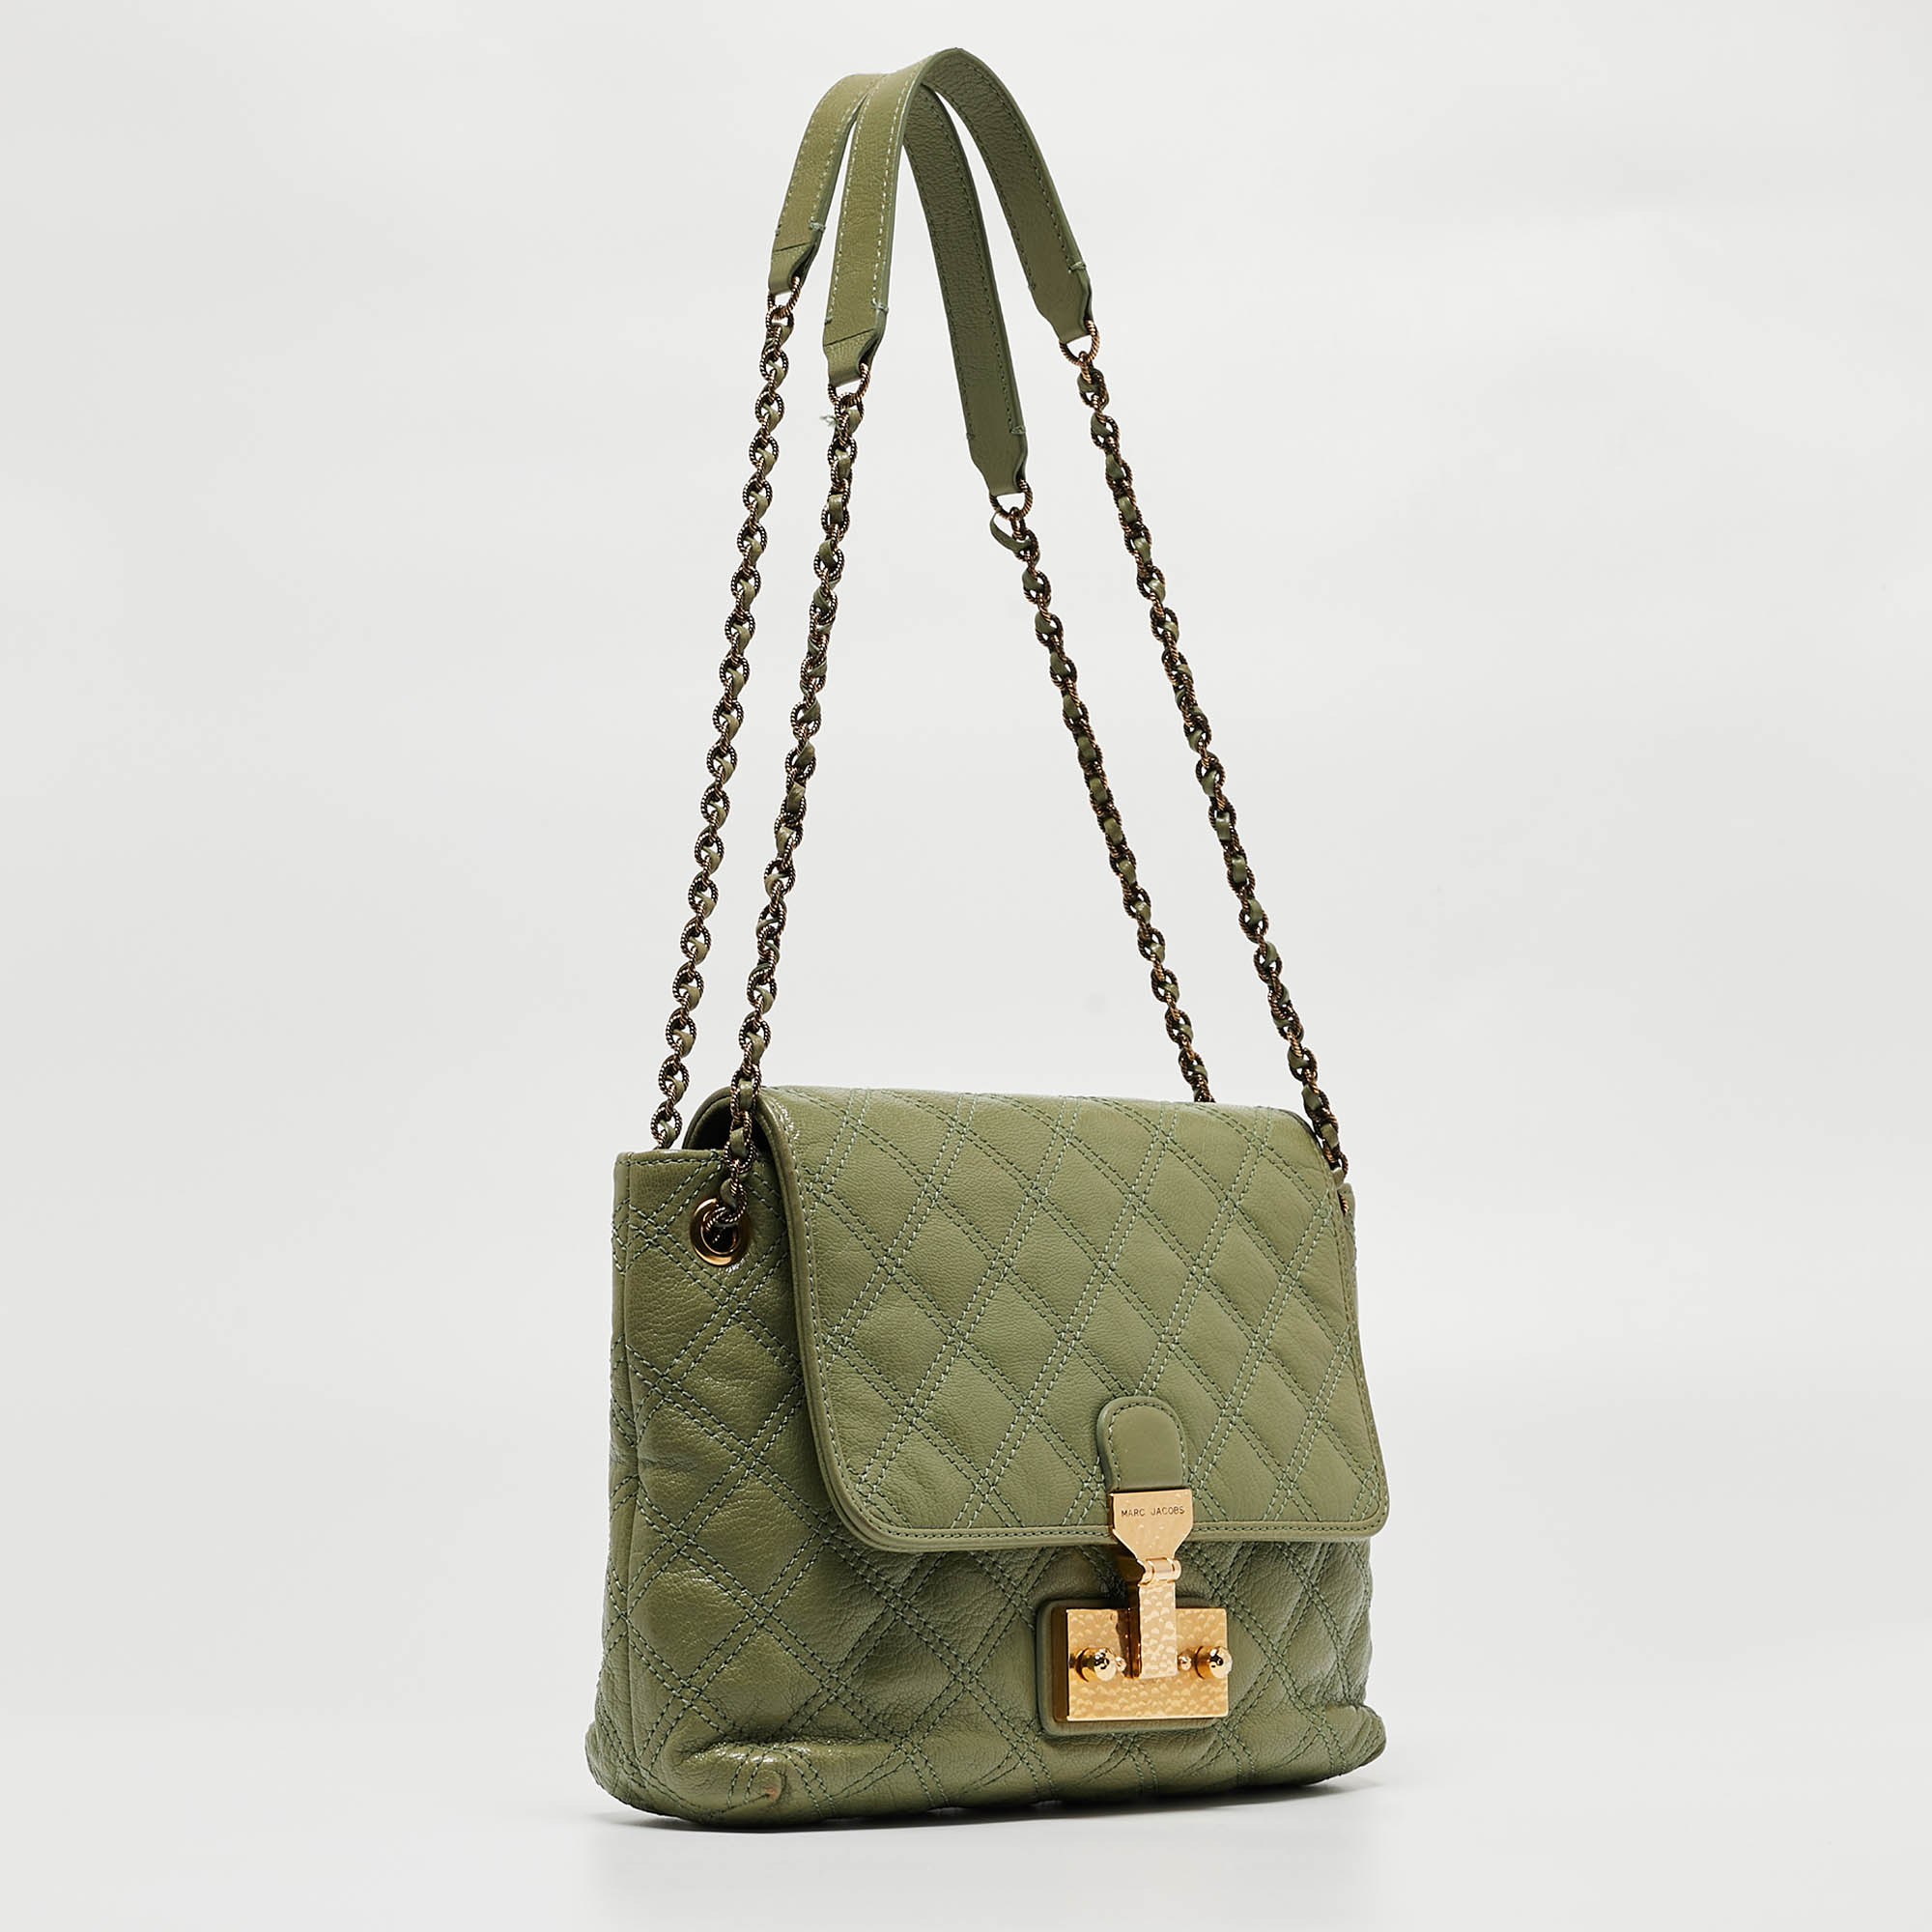 Marc Jacobs Fern Green Quilted Leather Baroque Shoulder Bag